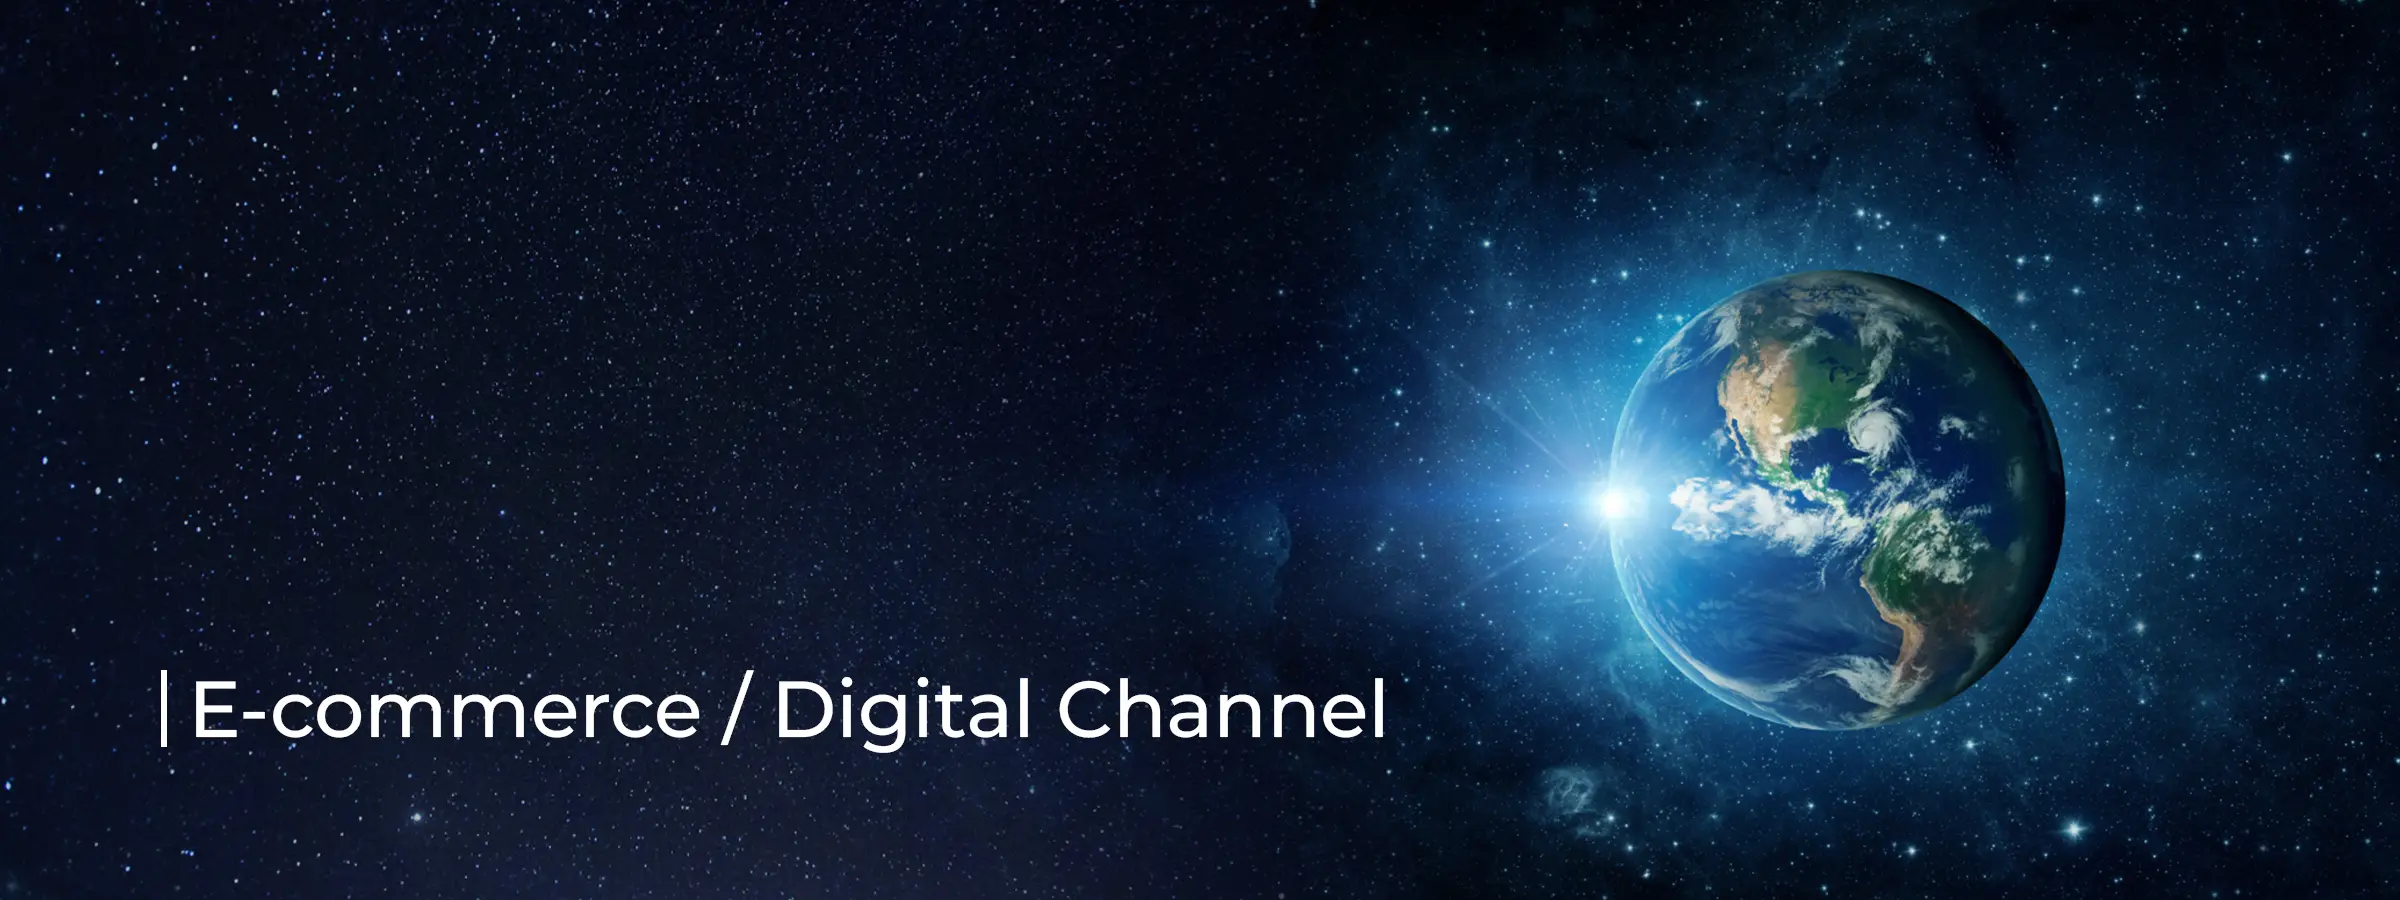 e-commerce-digital-channel-industry-banner